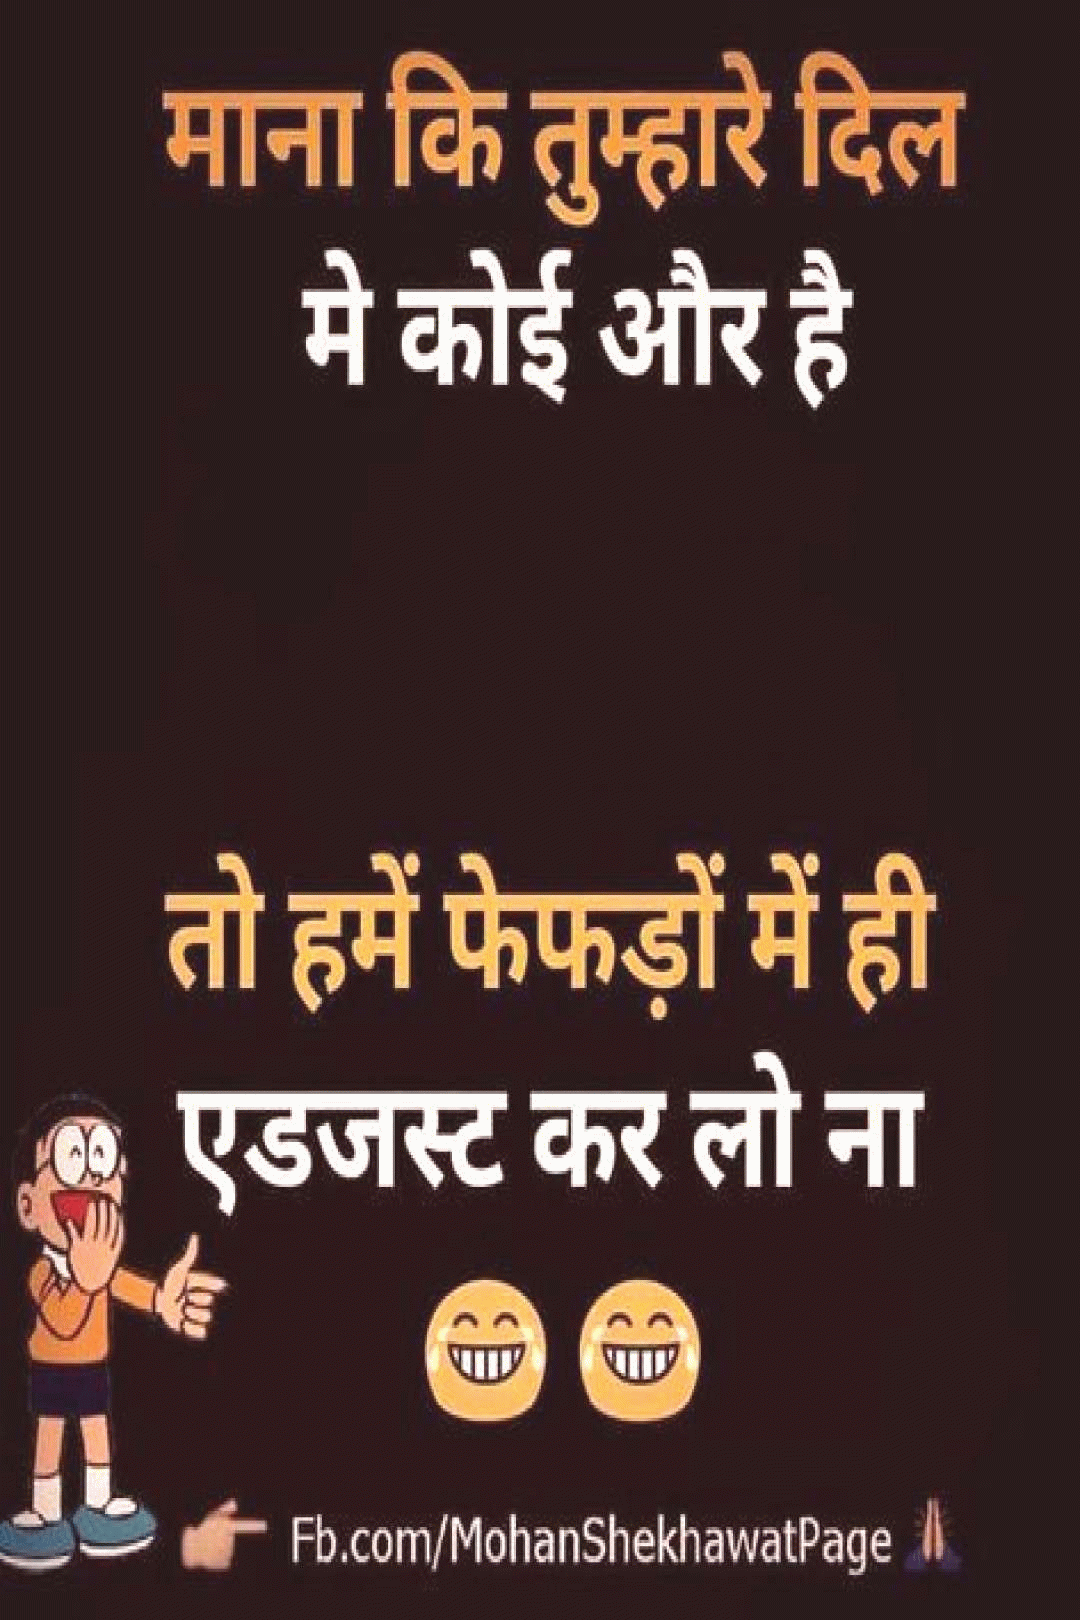 7 jokes in hindi ideas funny school small